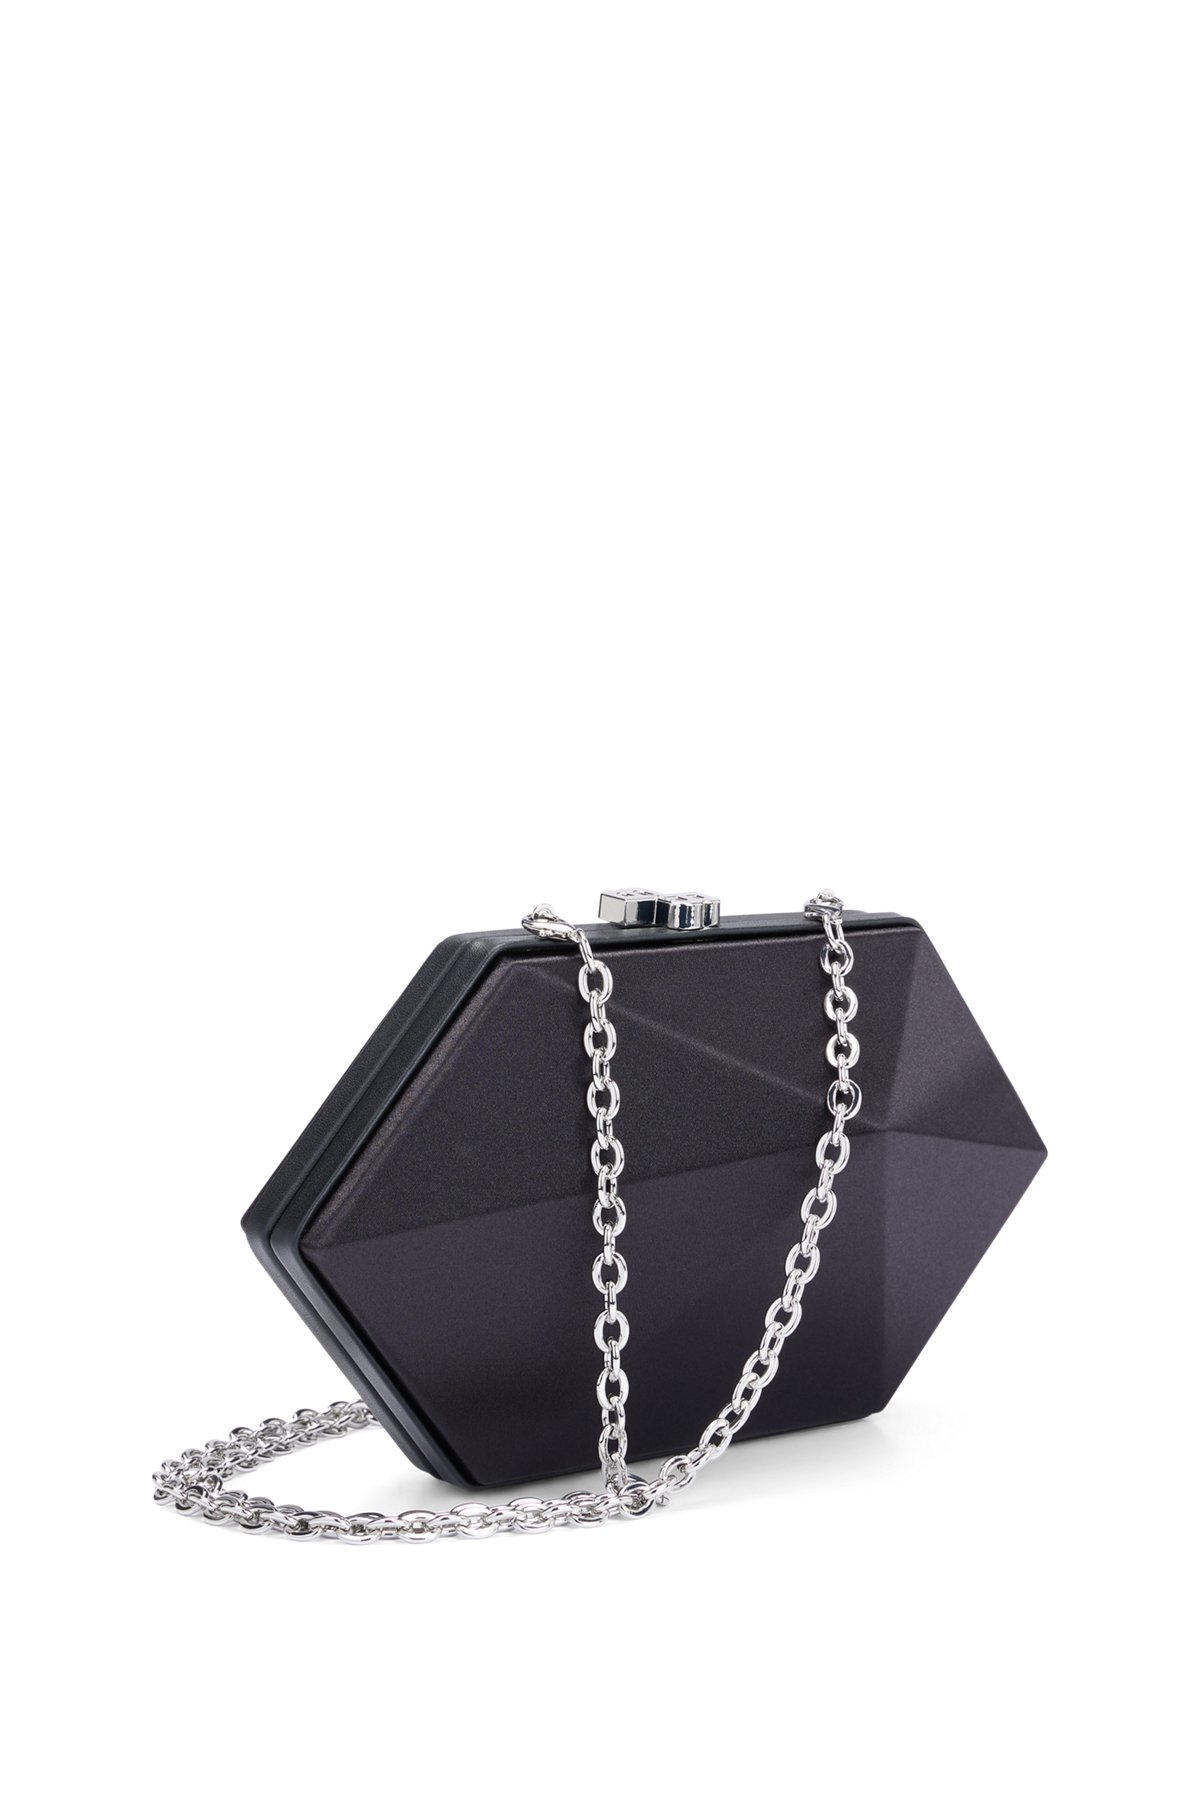 Satin clutch bag with detachable chain strap, Black